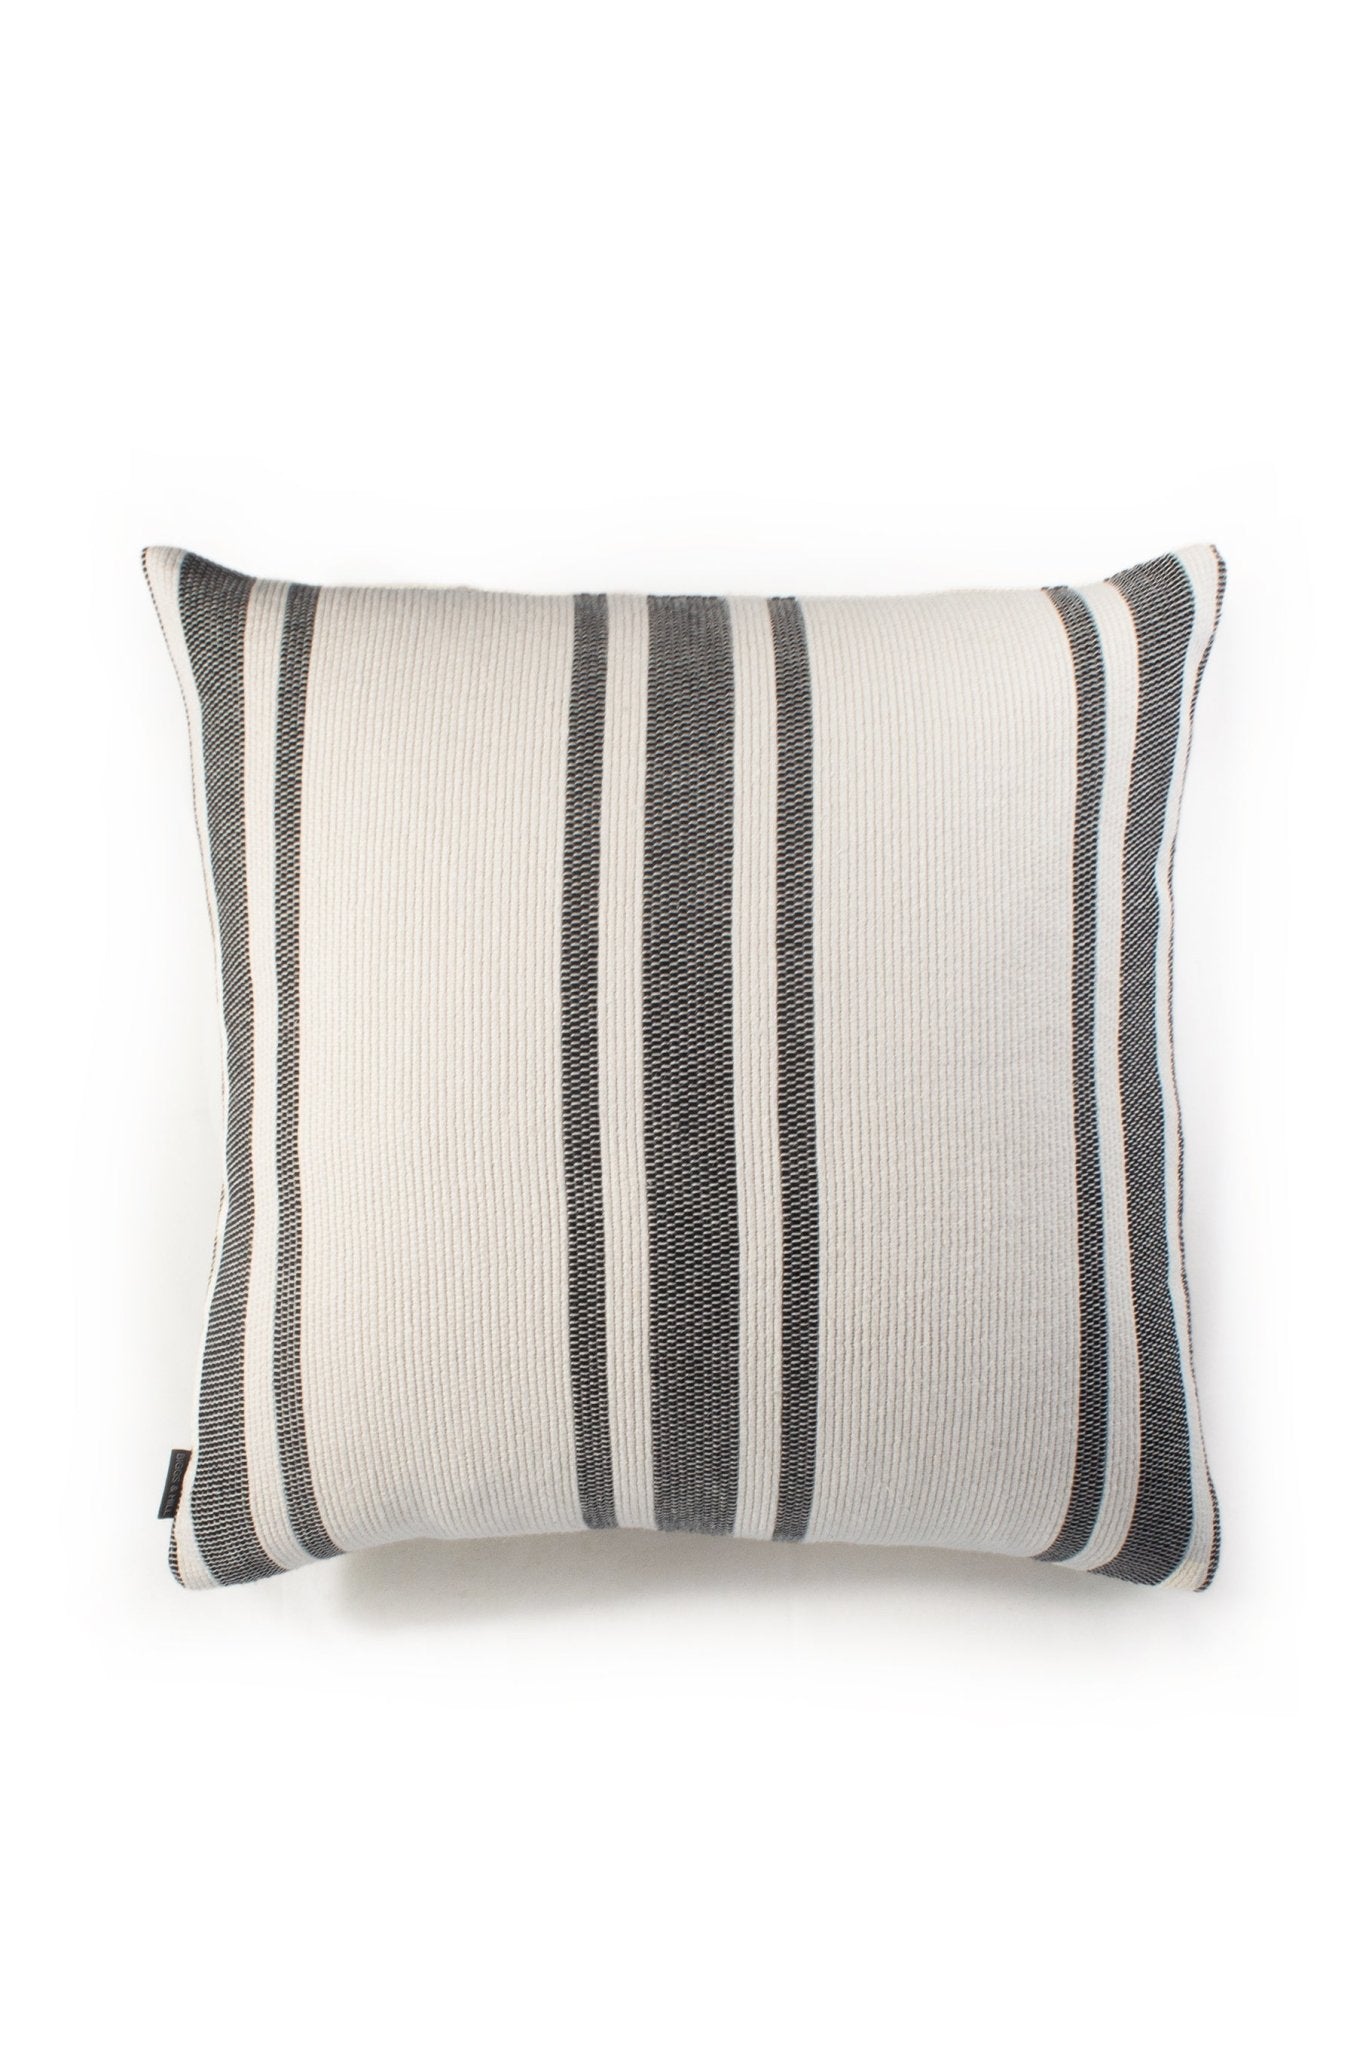 Striped Linen Black and Cream Cushion Cover - Biggs & Hill - Cushion Covers - 18 inch - 24 inch - 30 inch